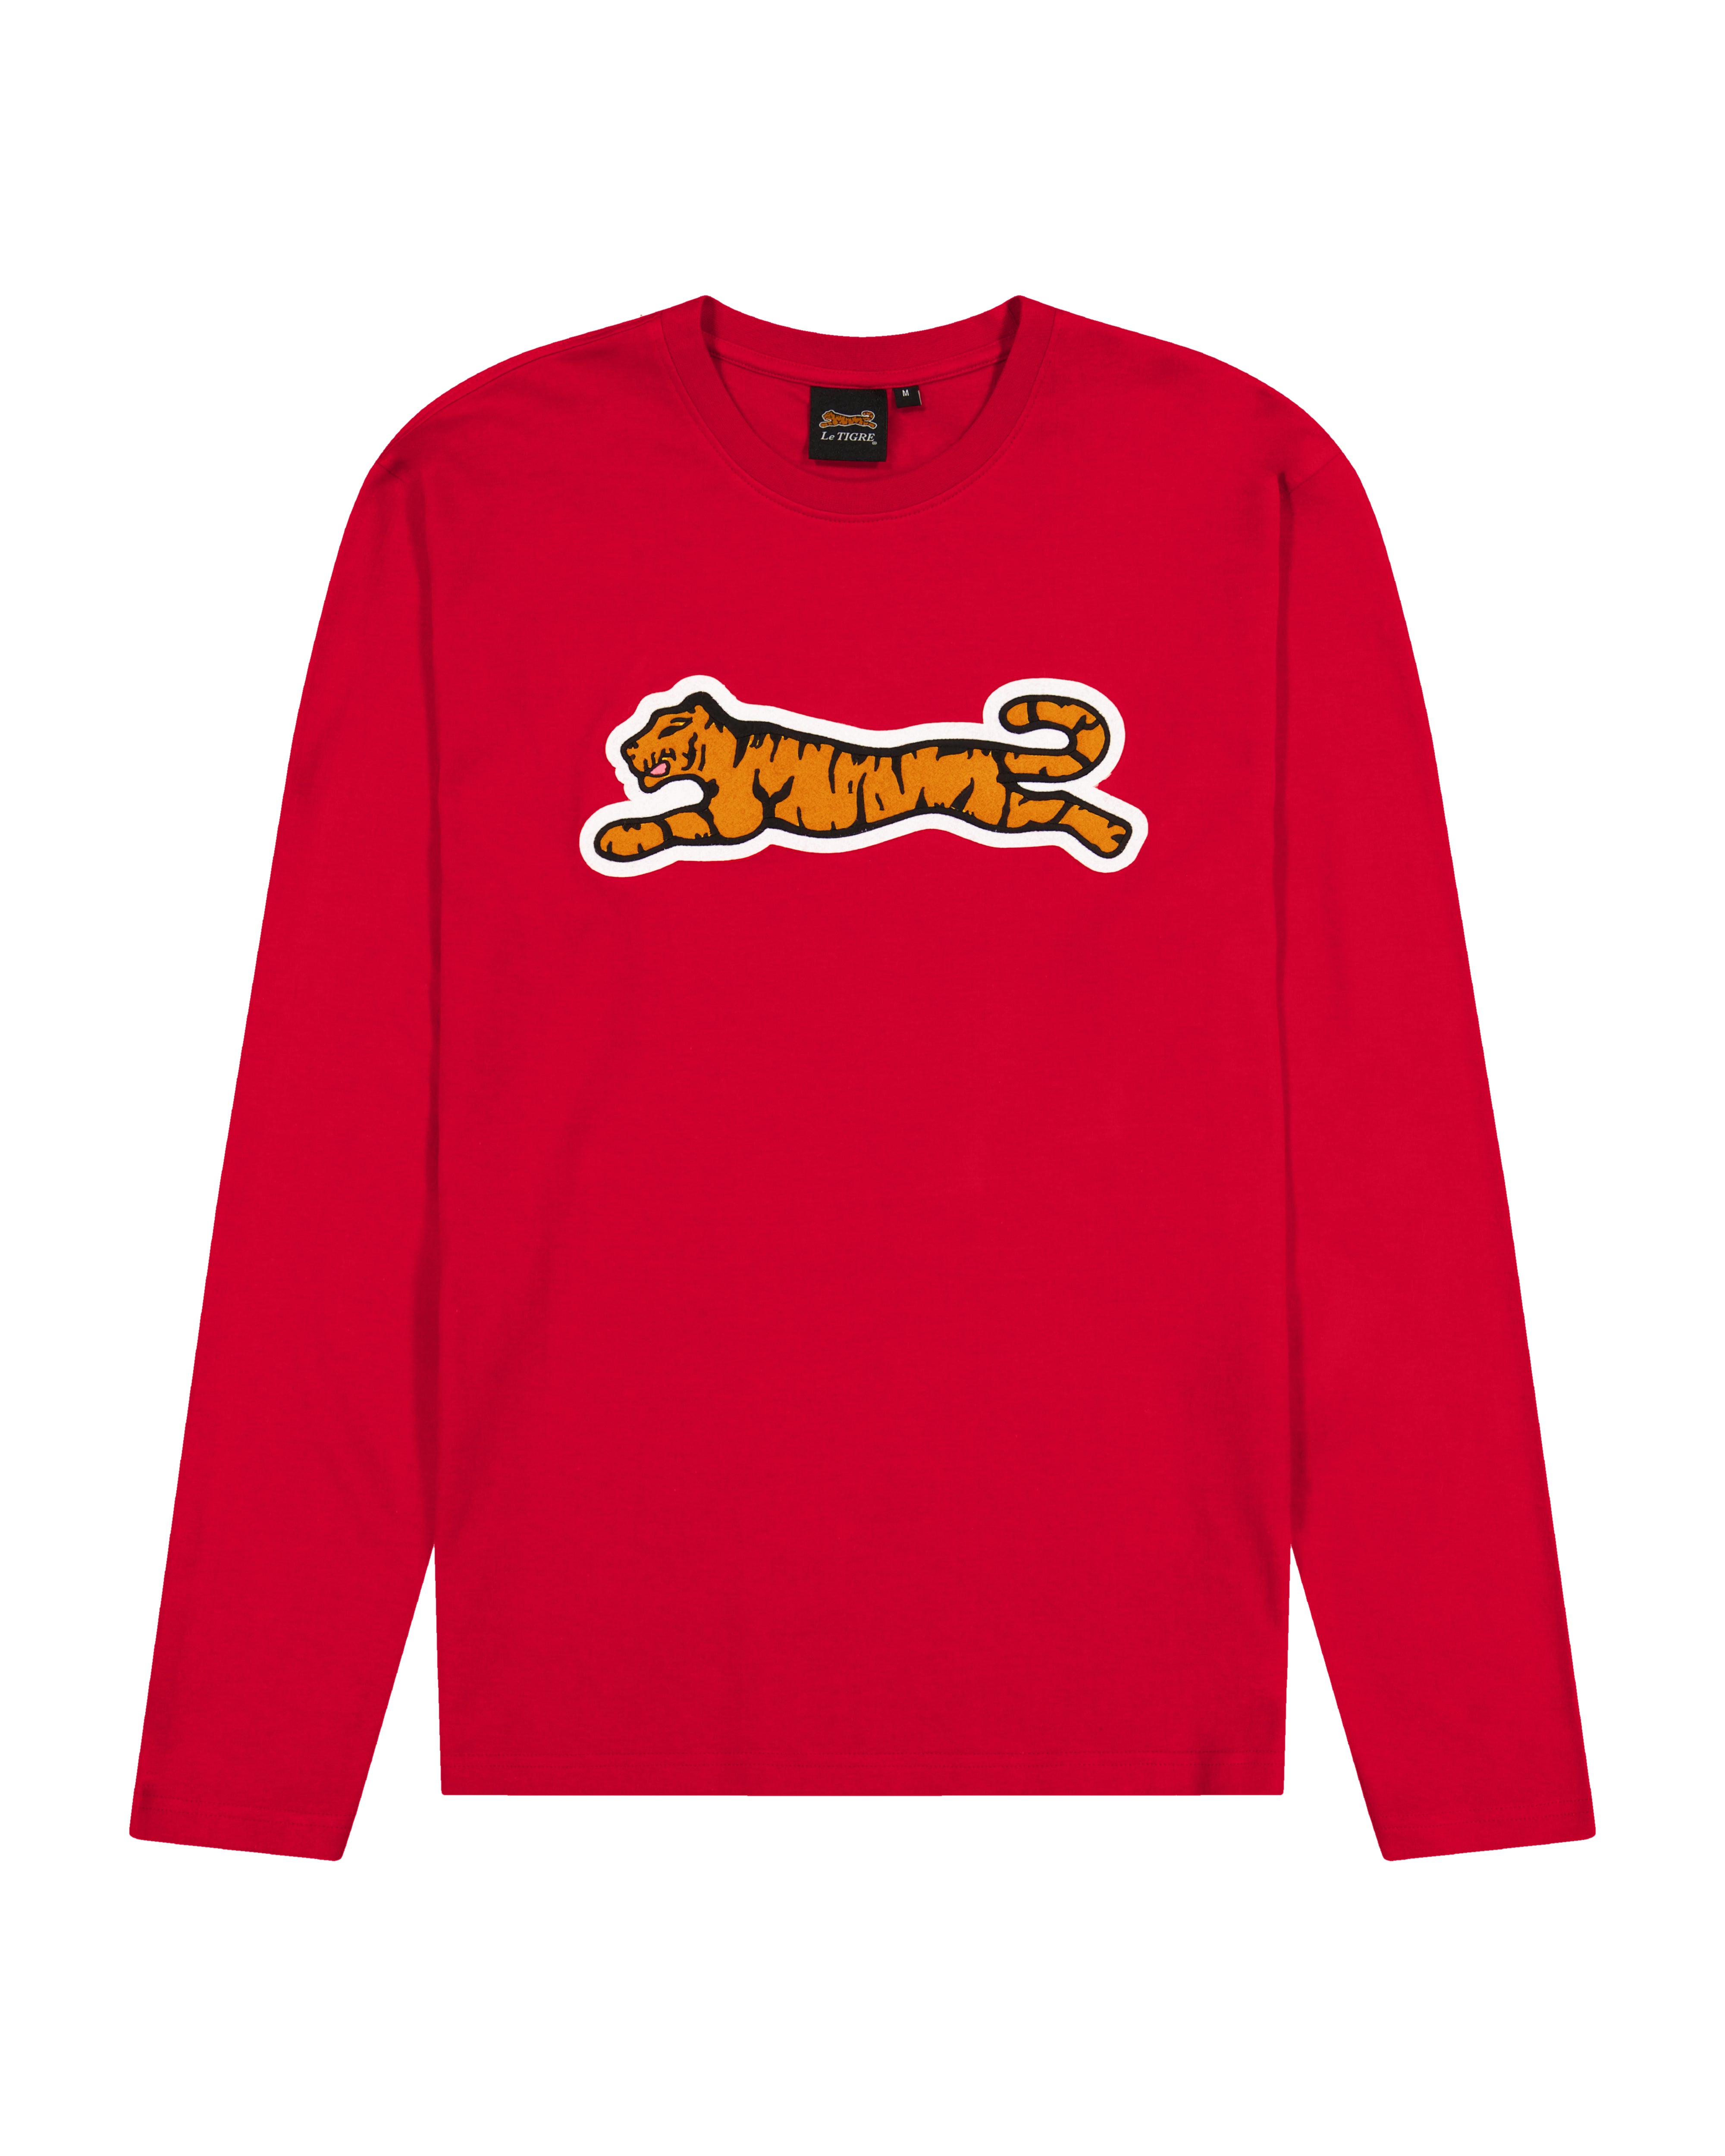 Go Get 'Em Tiger Sweater, Navy